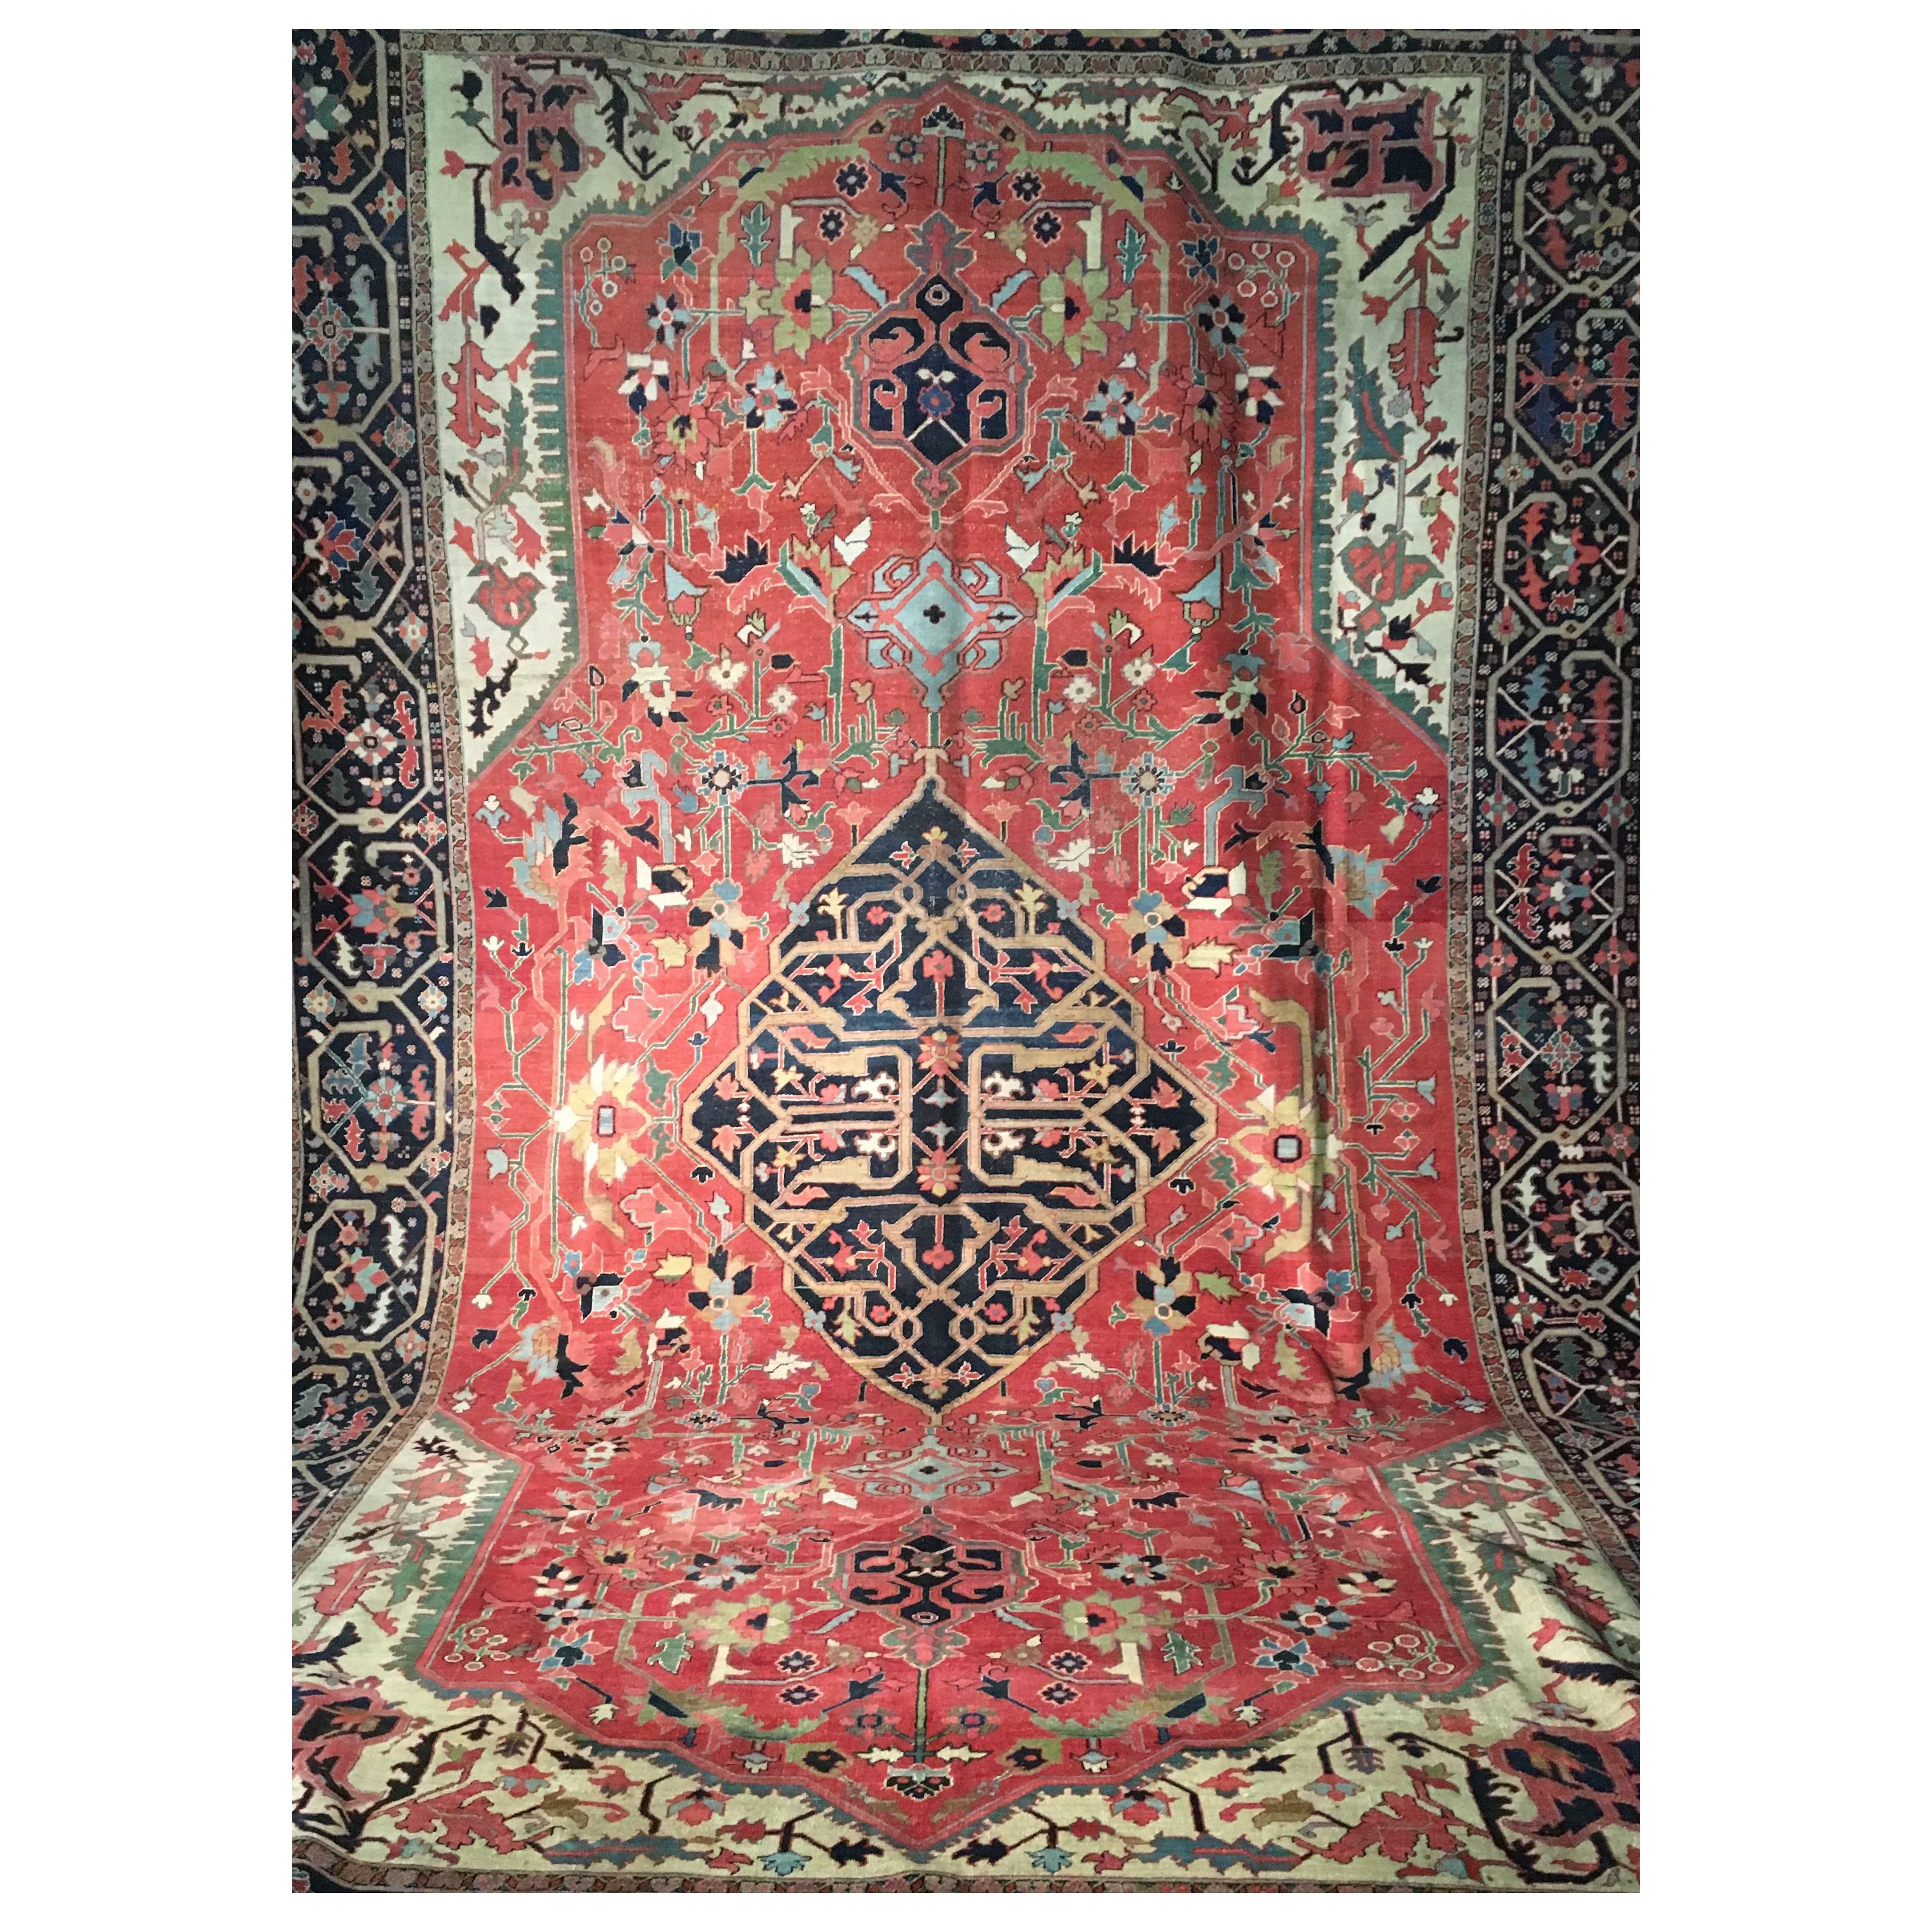 19th Century Heriz Serapi Rug from Iran